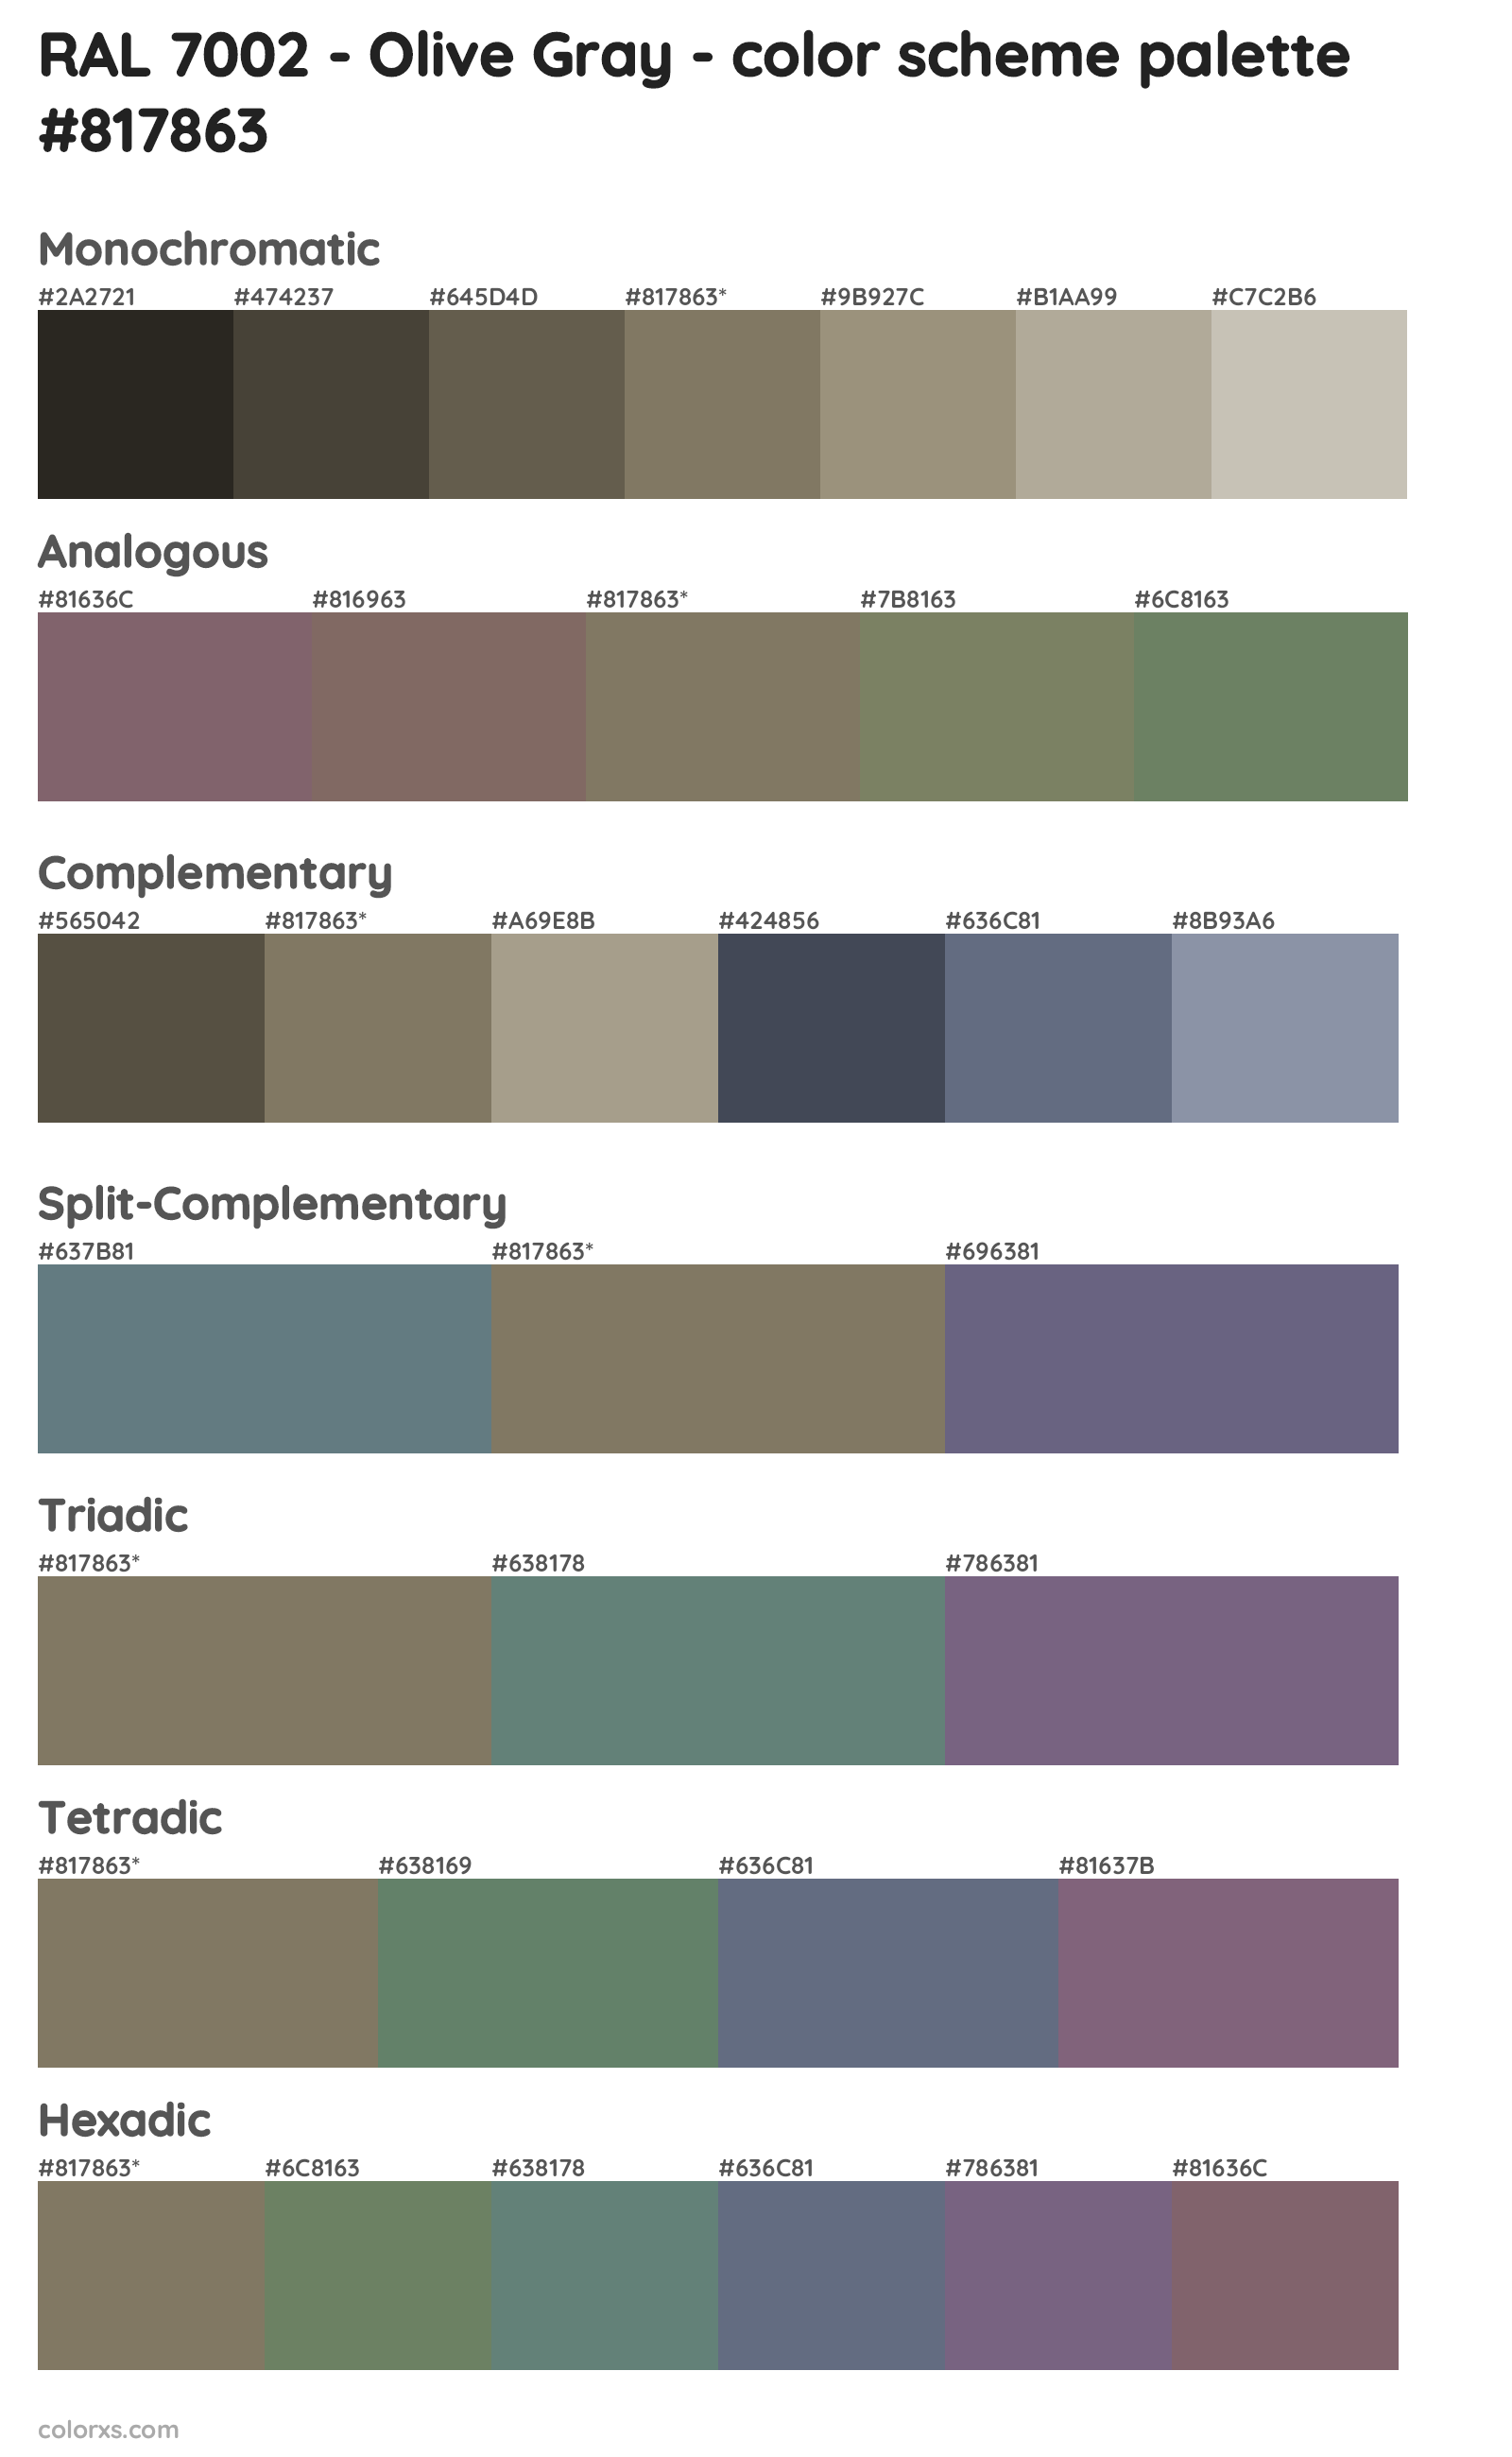 RAL 7002 - Olive Gray Color Scheme Palettes